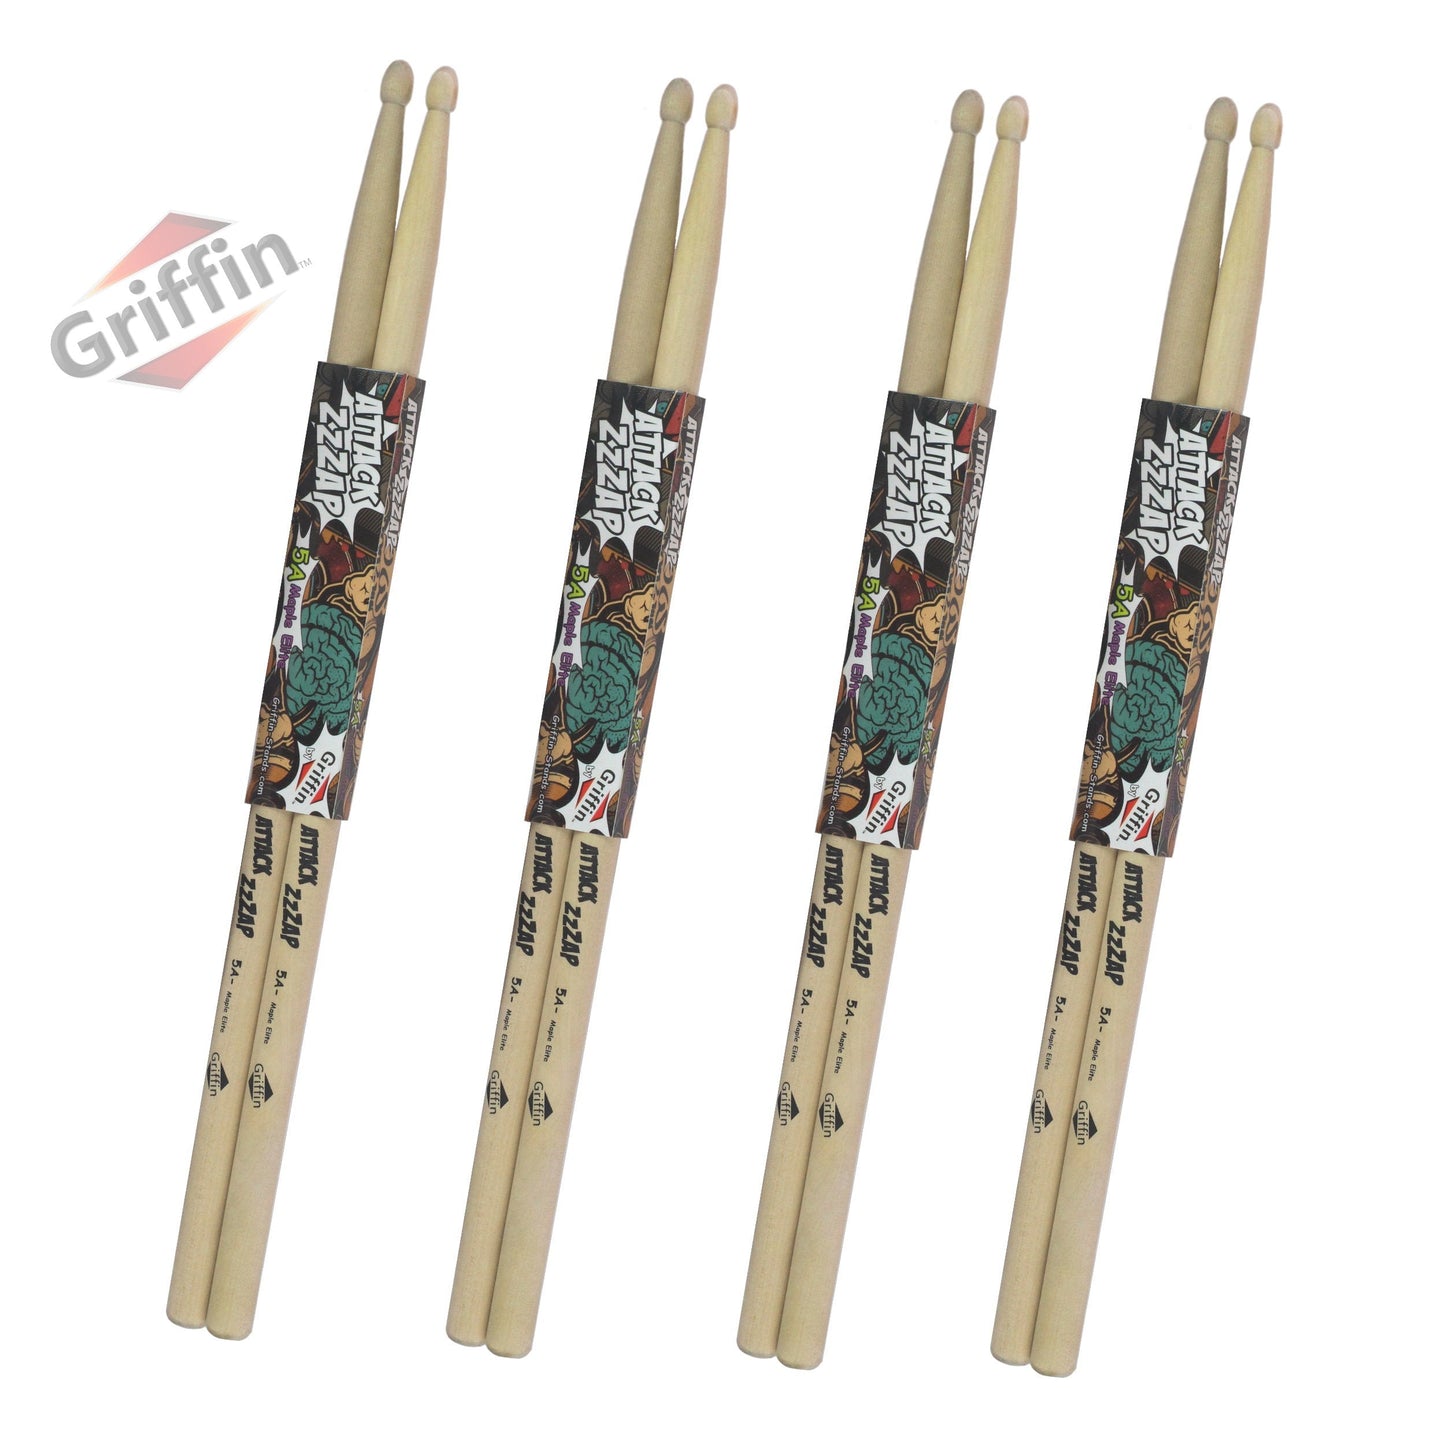 GRIFFIN Attack Zzzap Drum Sticks - 4 Pairs of Select Elite Maple Wood Size 5A - Premium Balanced